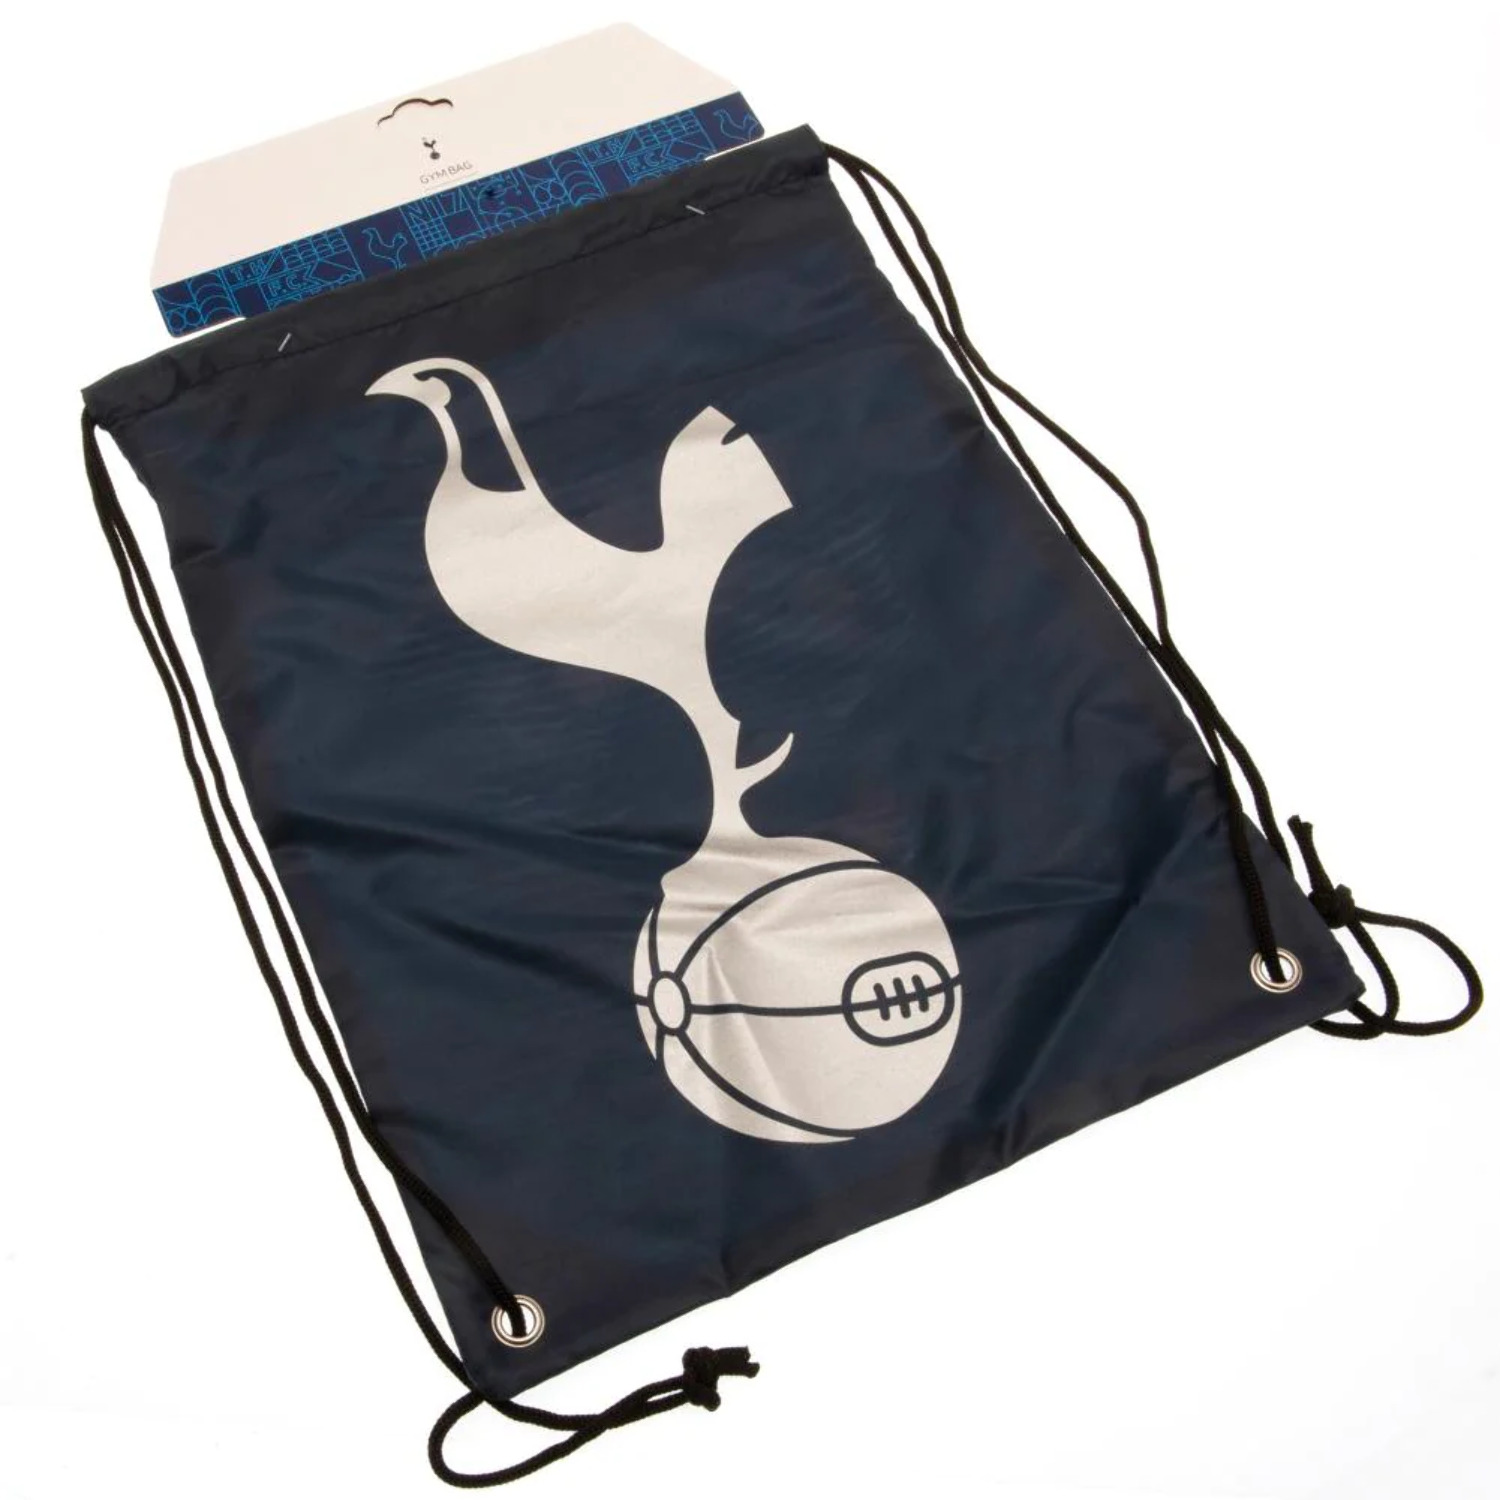 Tottenham Hotspur FC Crest Gym Bag - image 2 of 2